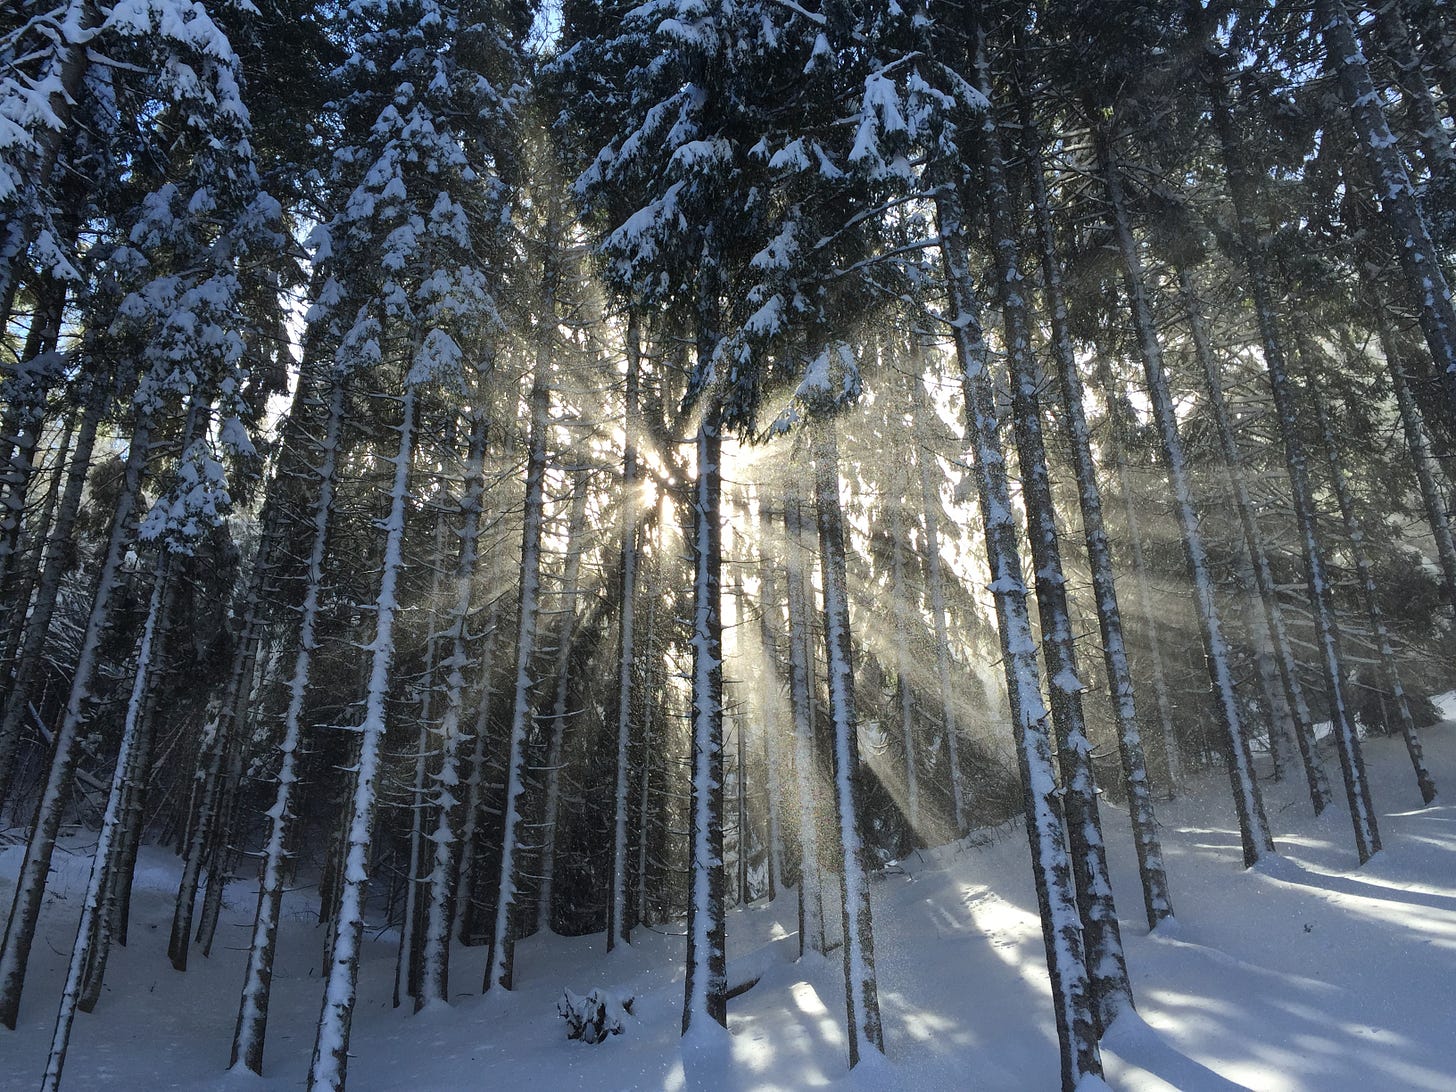 Beaming sunlight breaks between tall dark trees in a snowy forest.